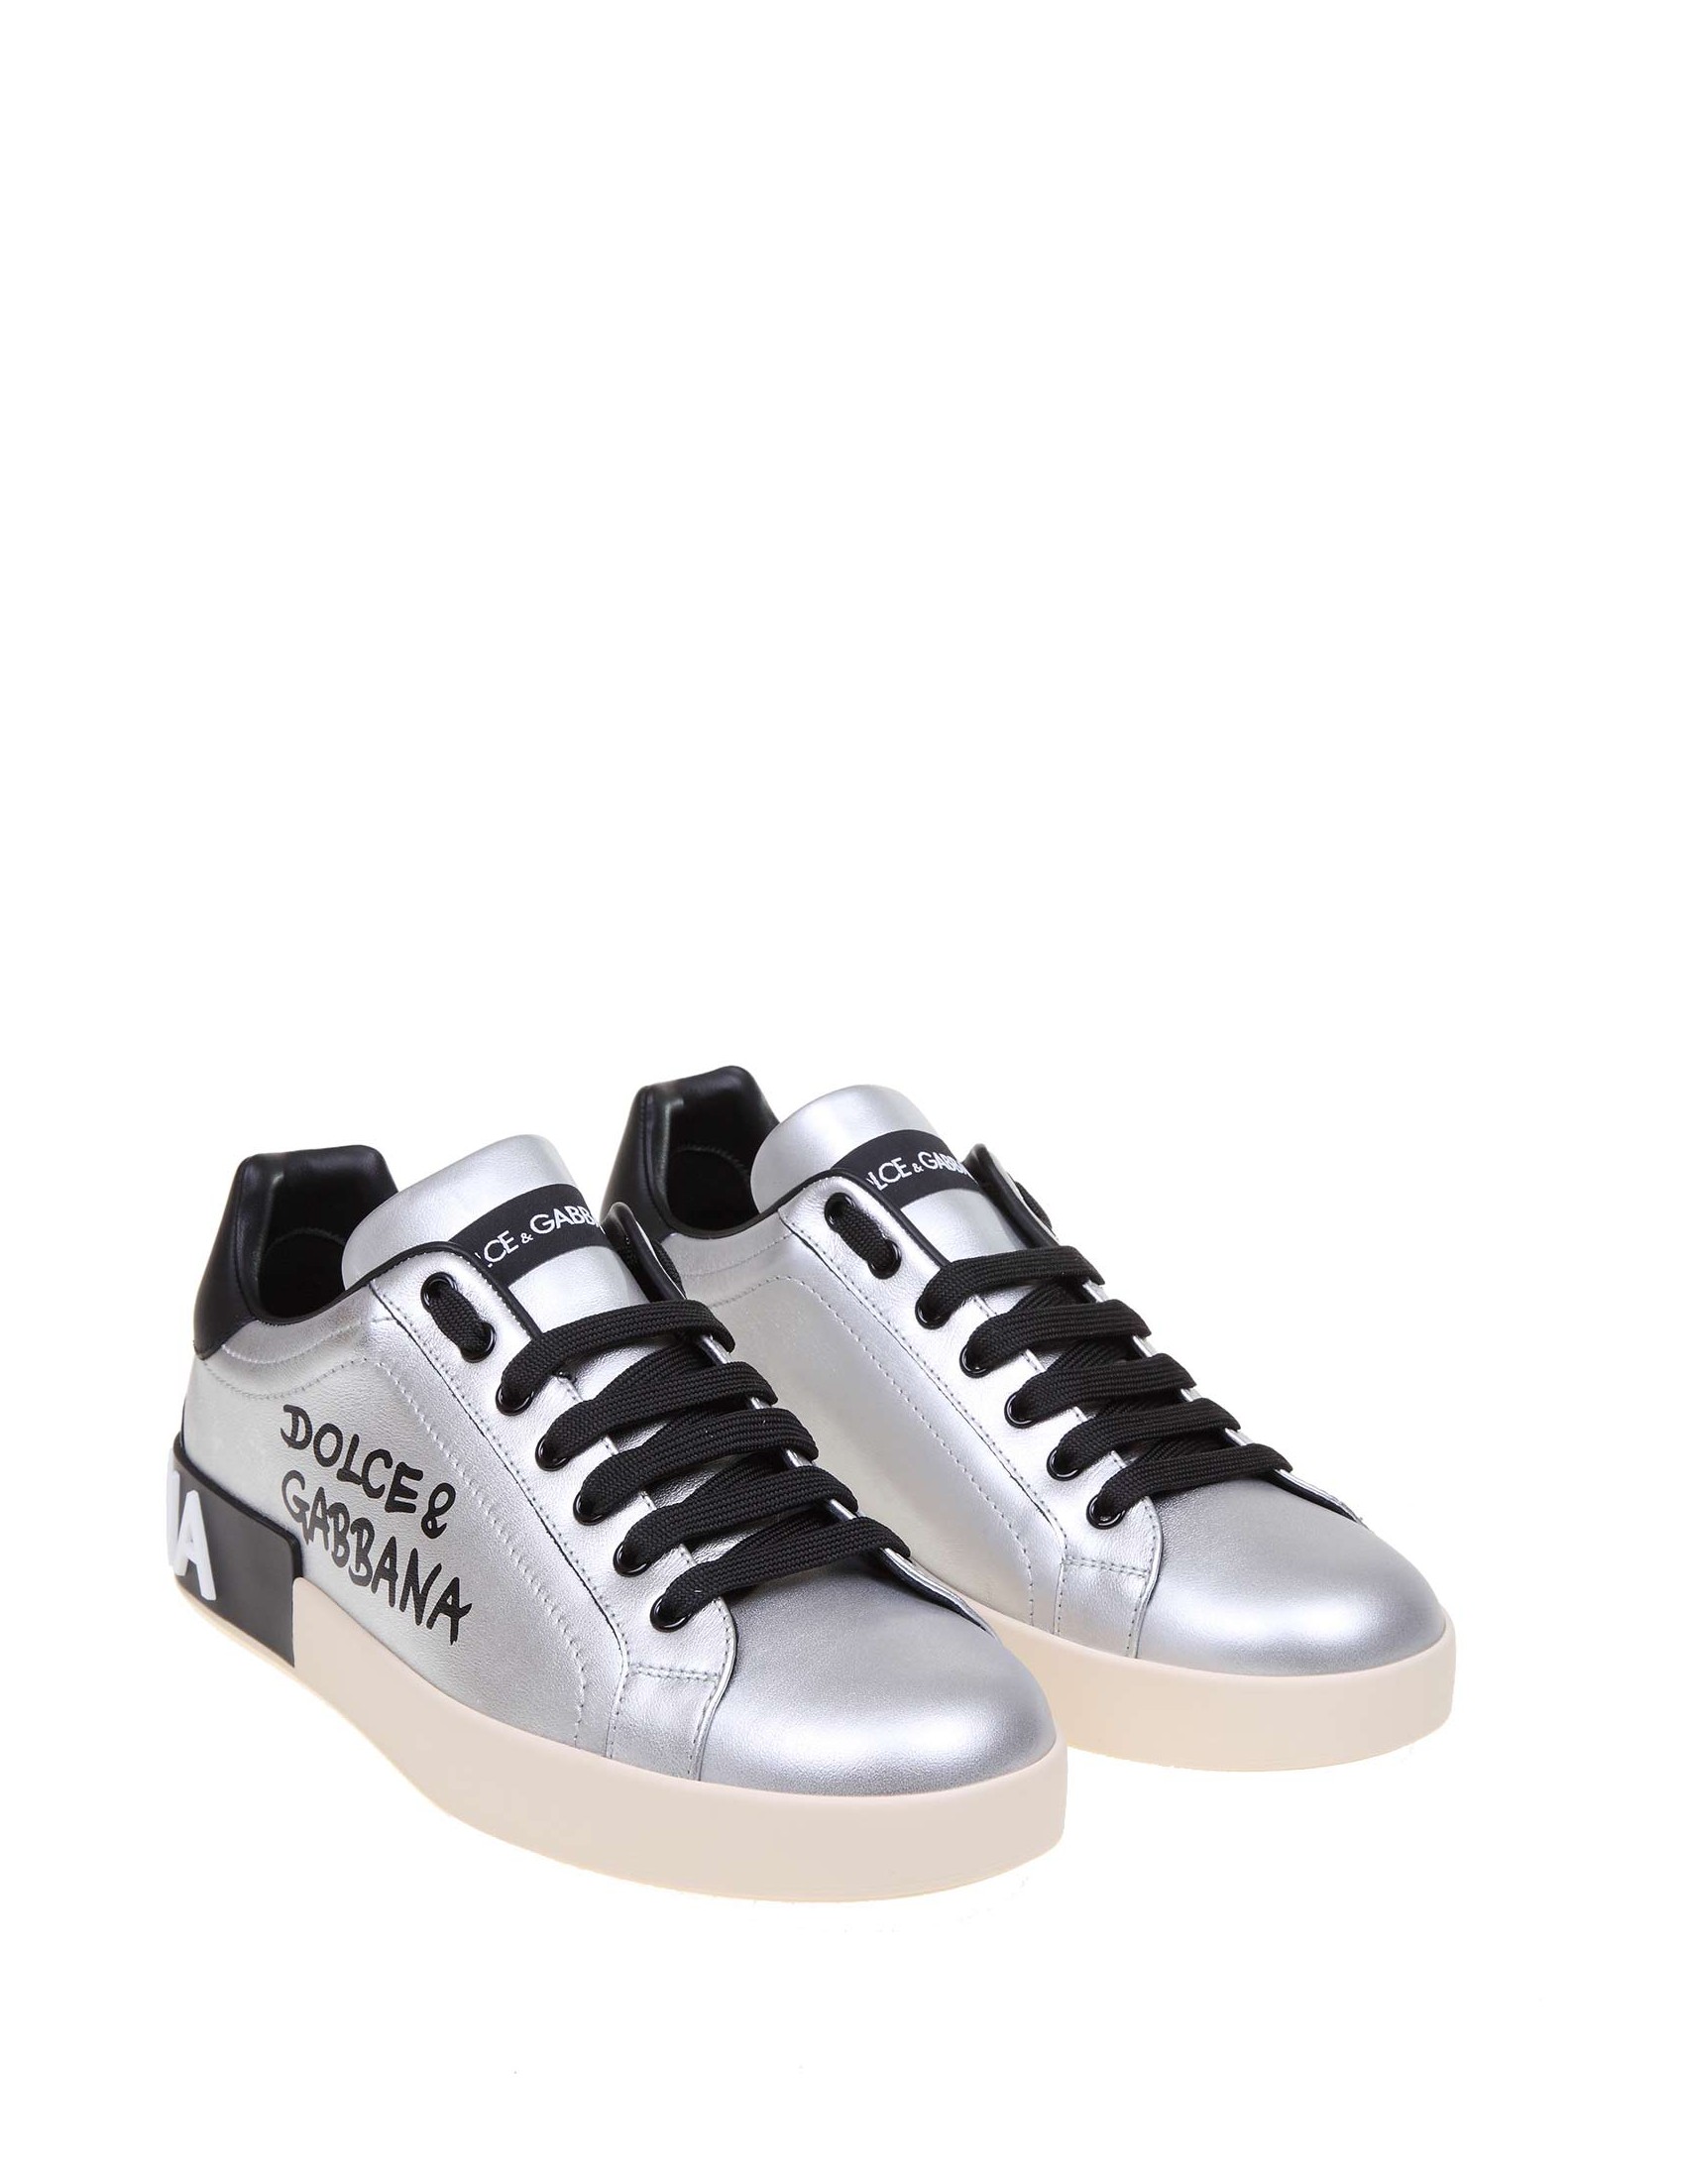 dolce gabbana silver sneakers